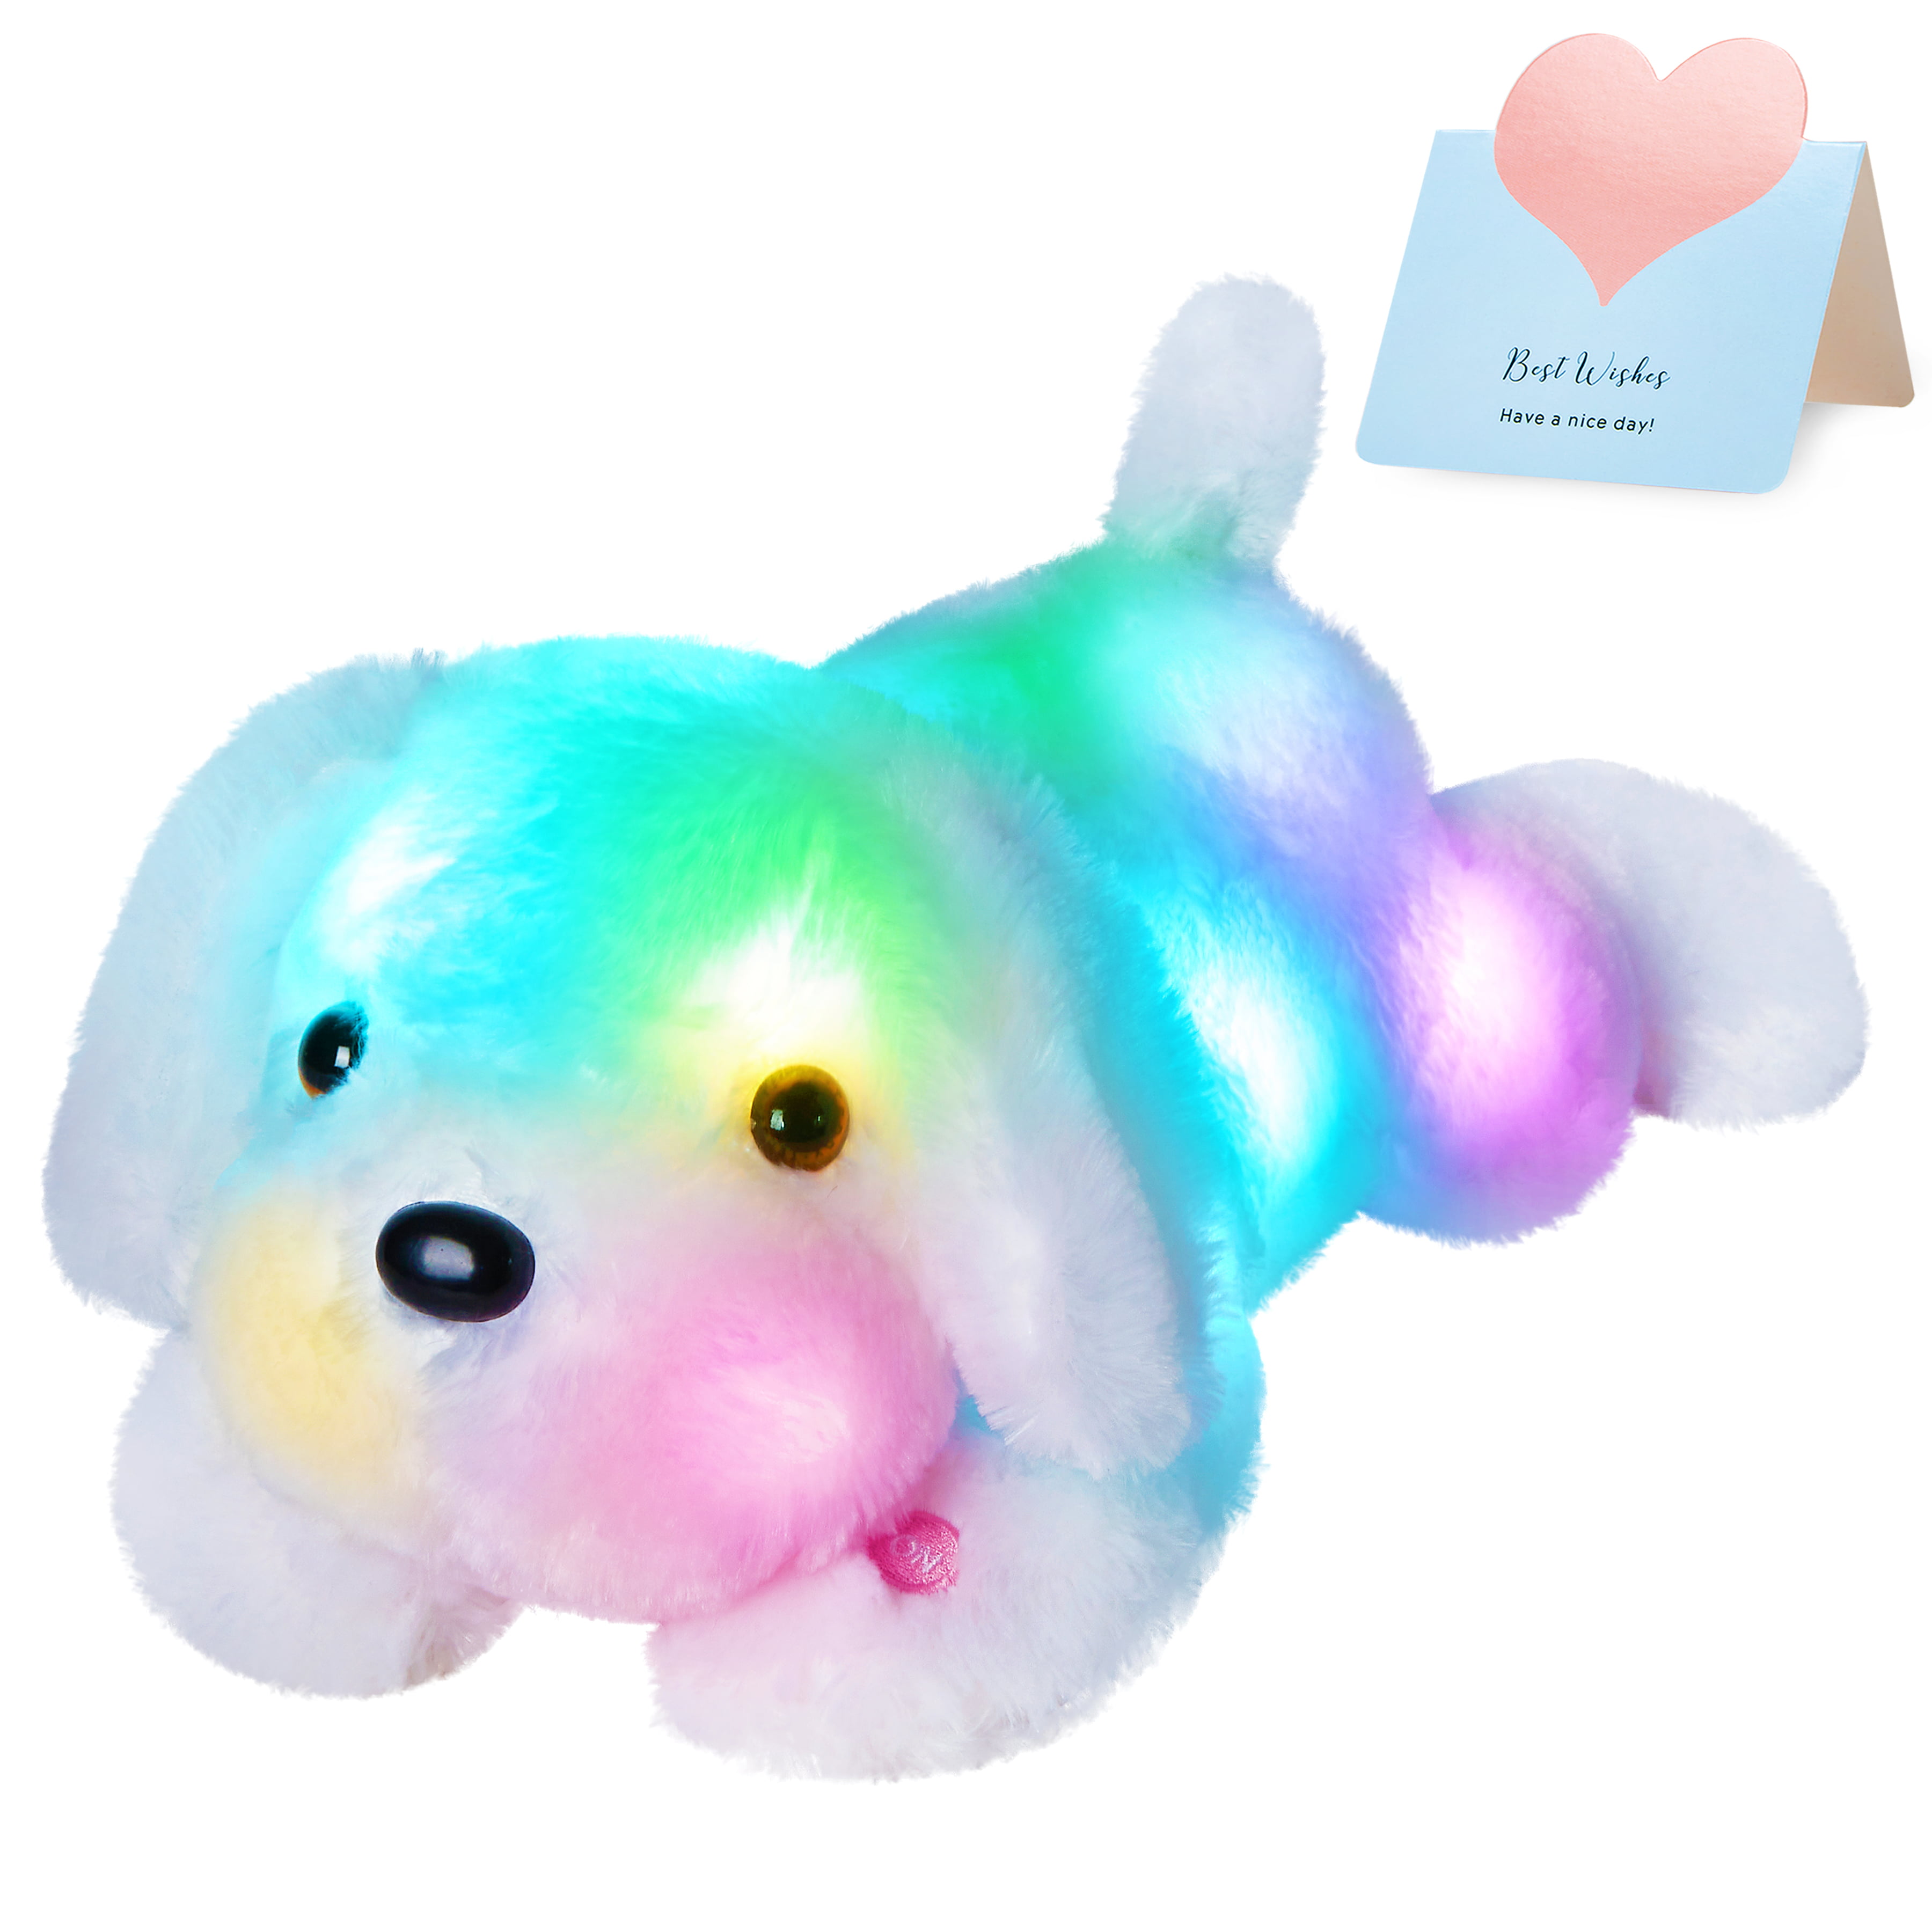 Plush Dog Led Light Stuffed Toy Night Lovely Creative Glow Animal Kids Gift Soft 